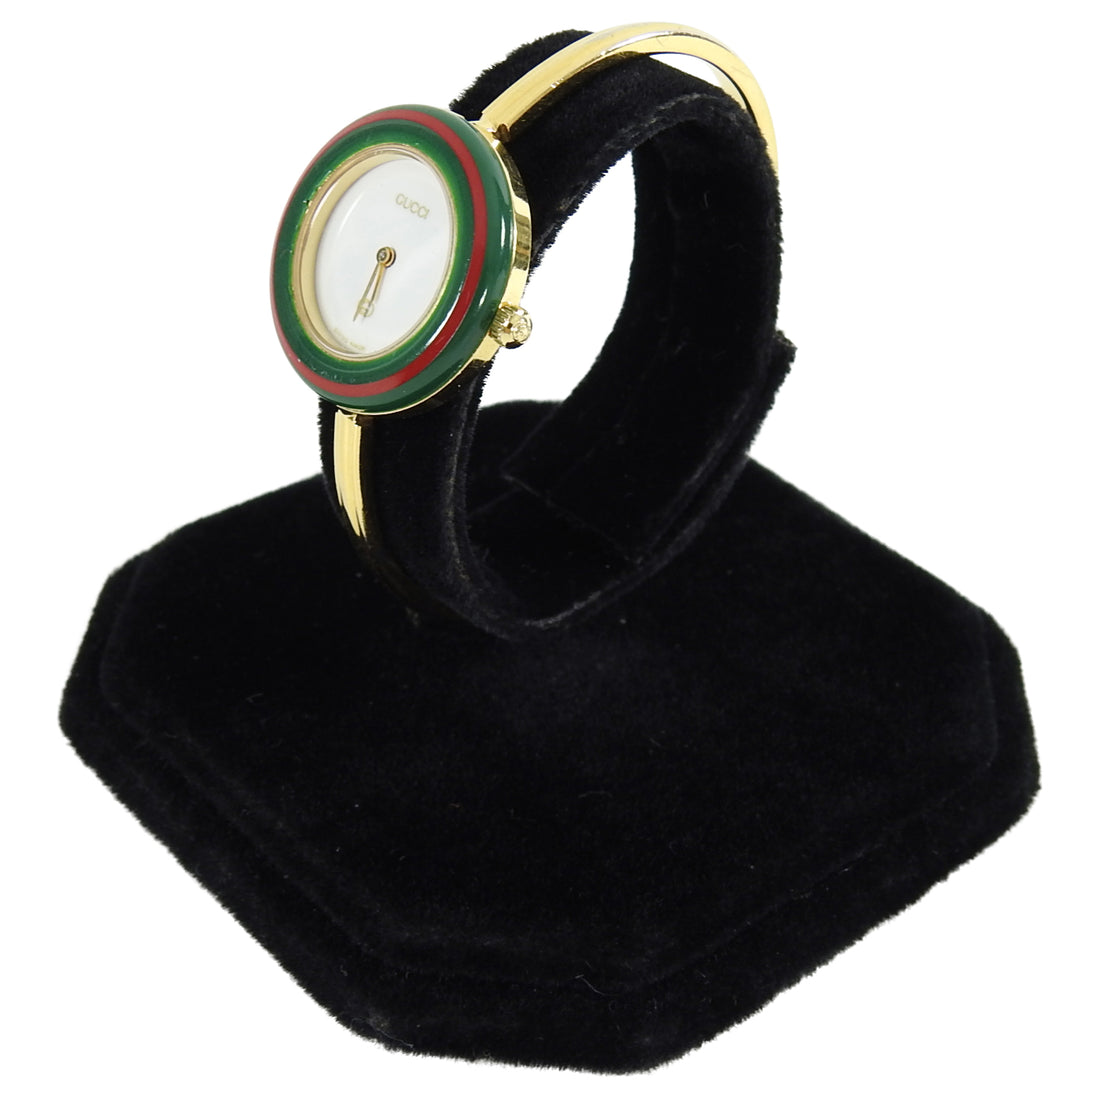 Gucci Vintage 1980’s Interchangeable Bezel Bracelet Watch